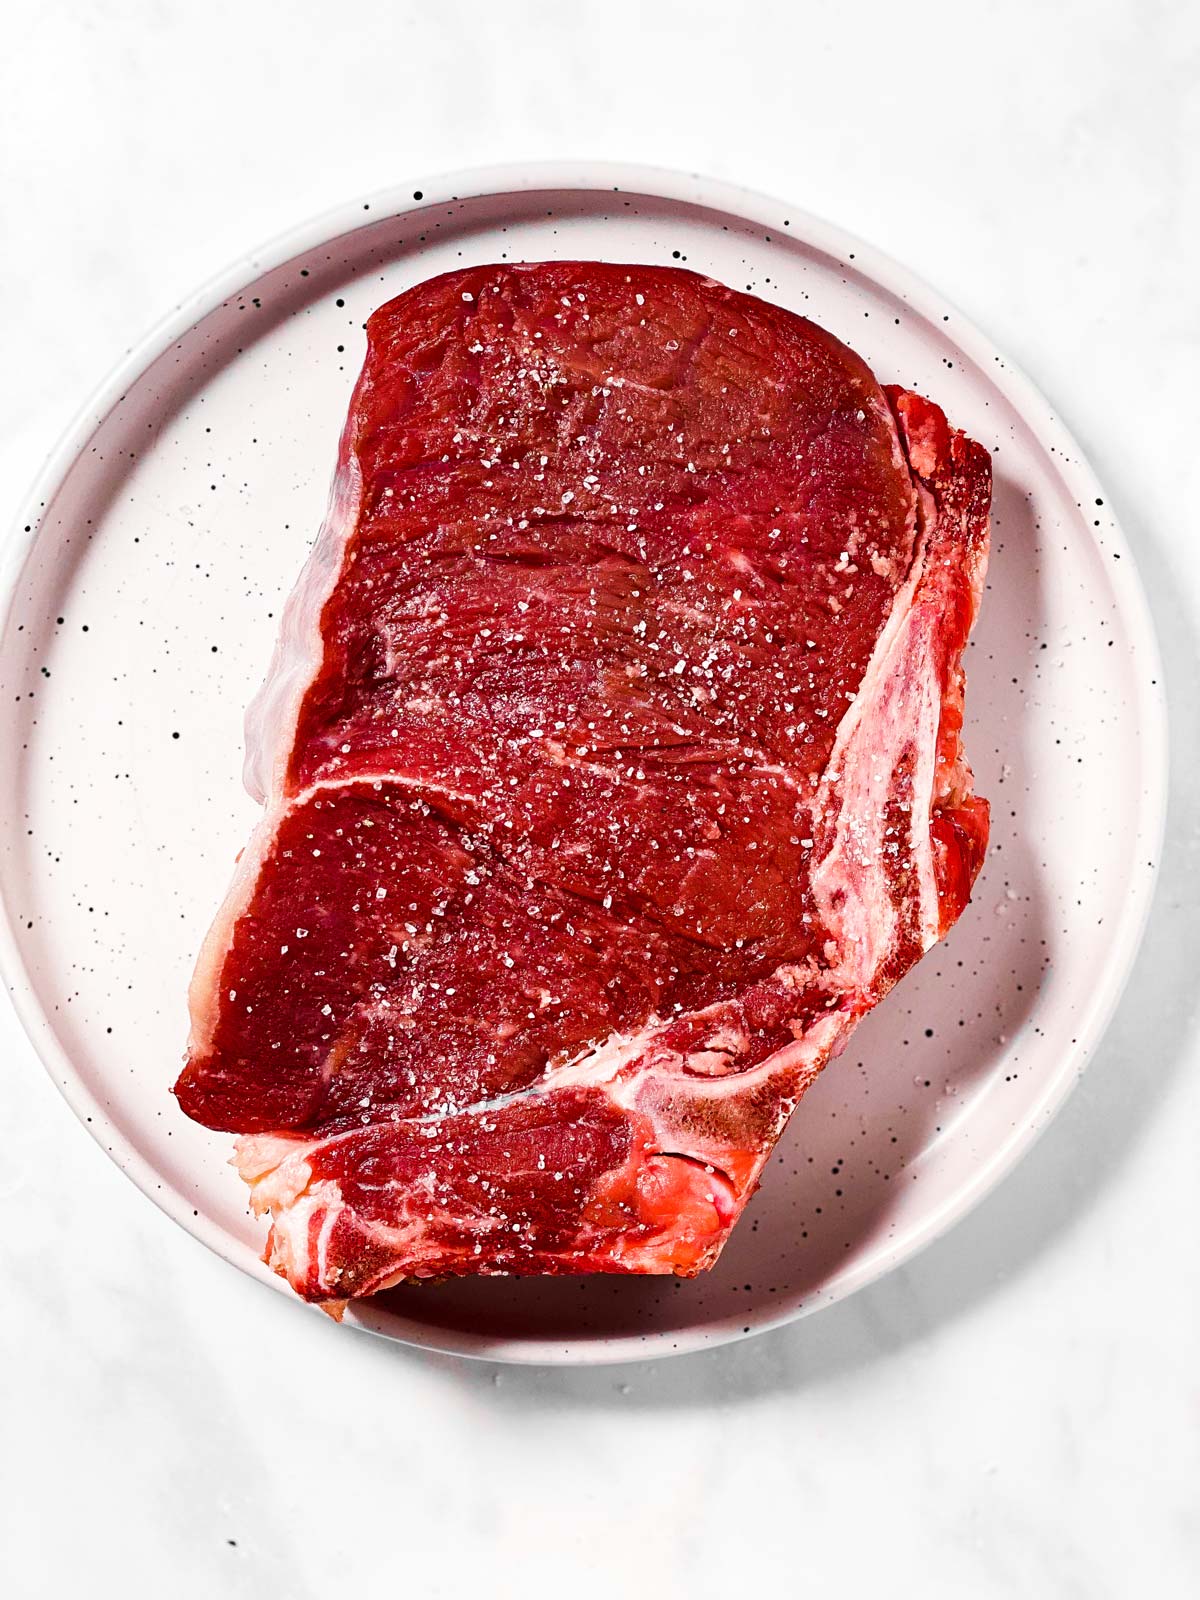 raw seasoned steak on white plate